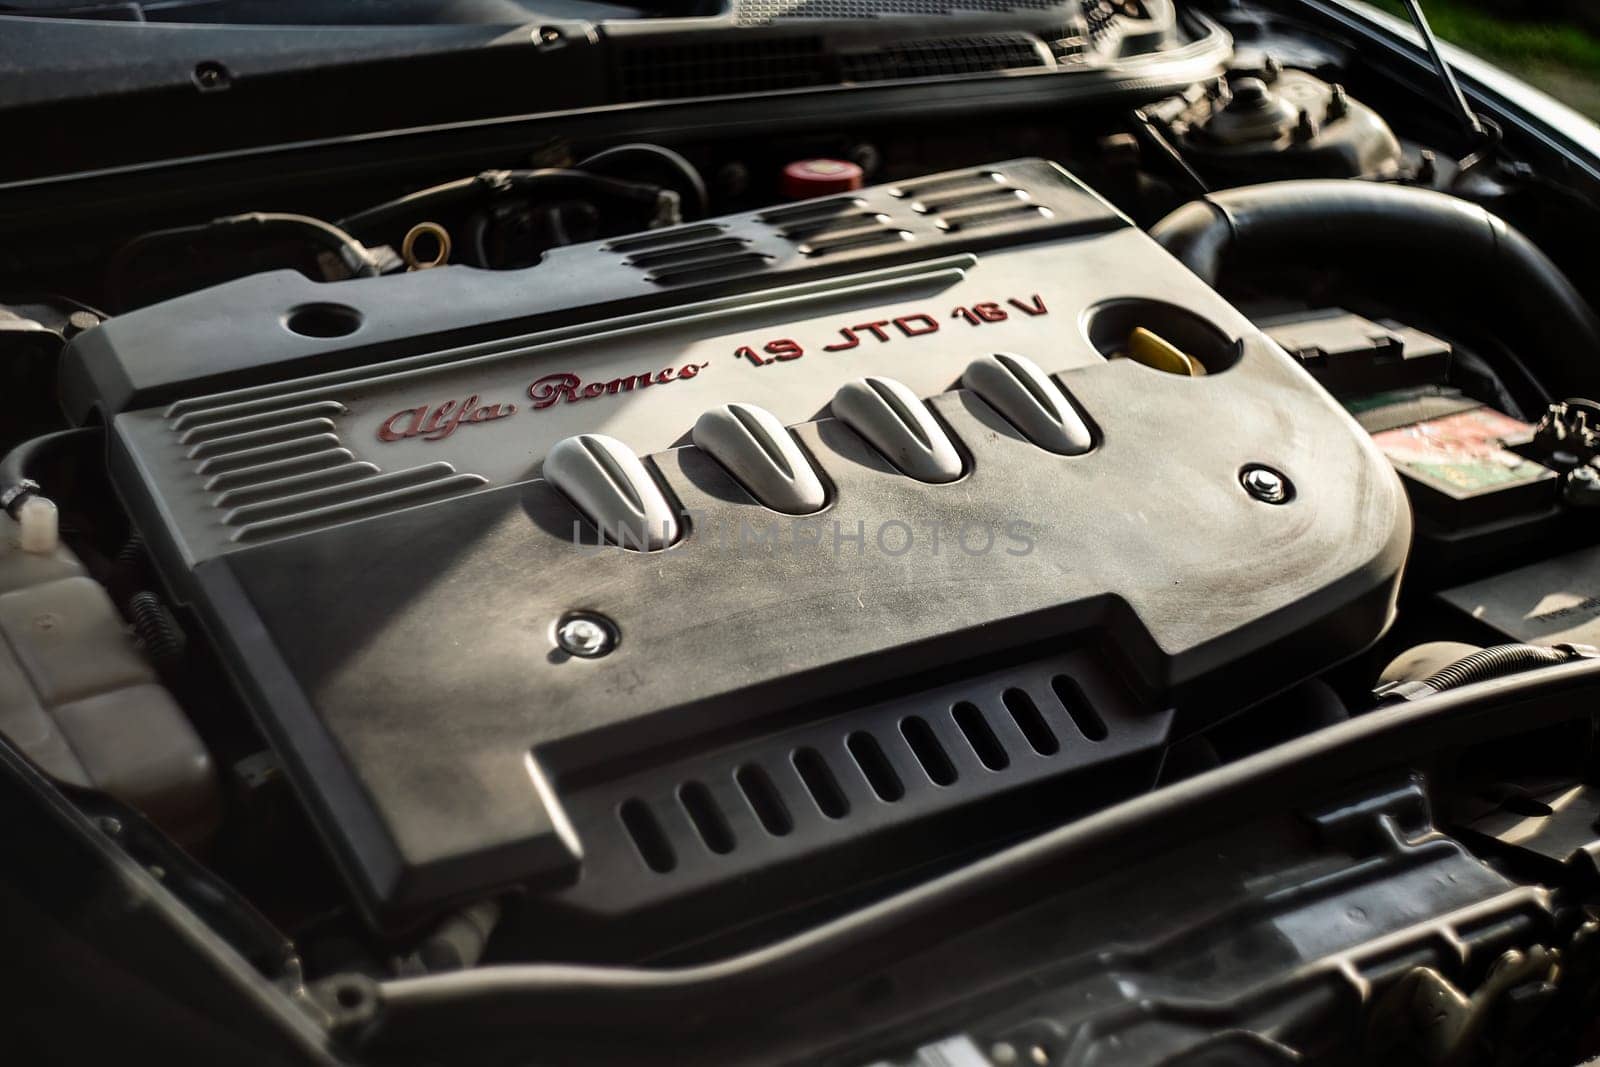 Alfa Romeo 1.9 JTD 16V Engine Detail by pippocarlot